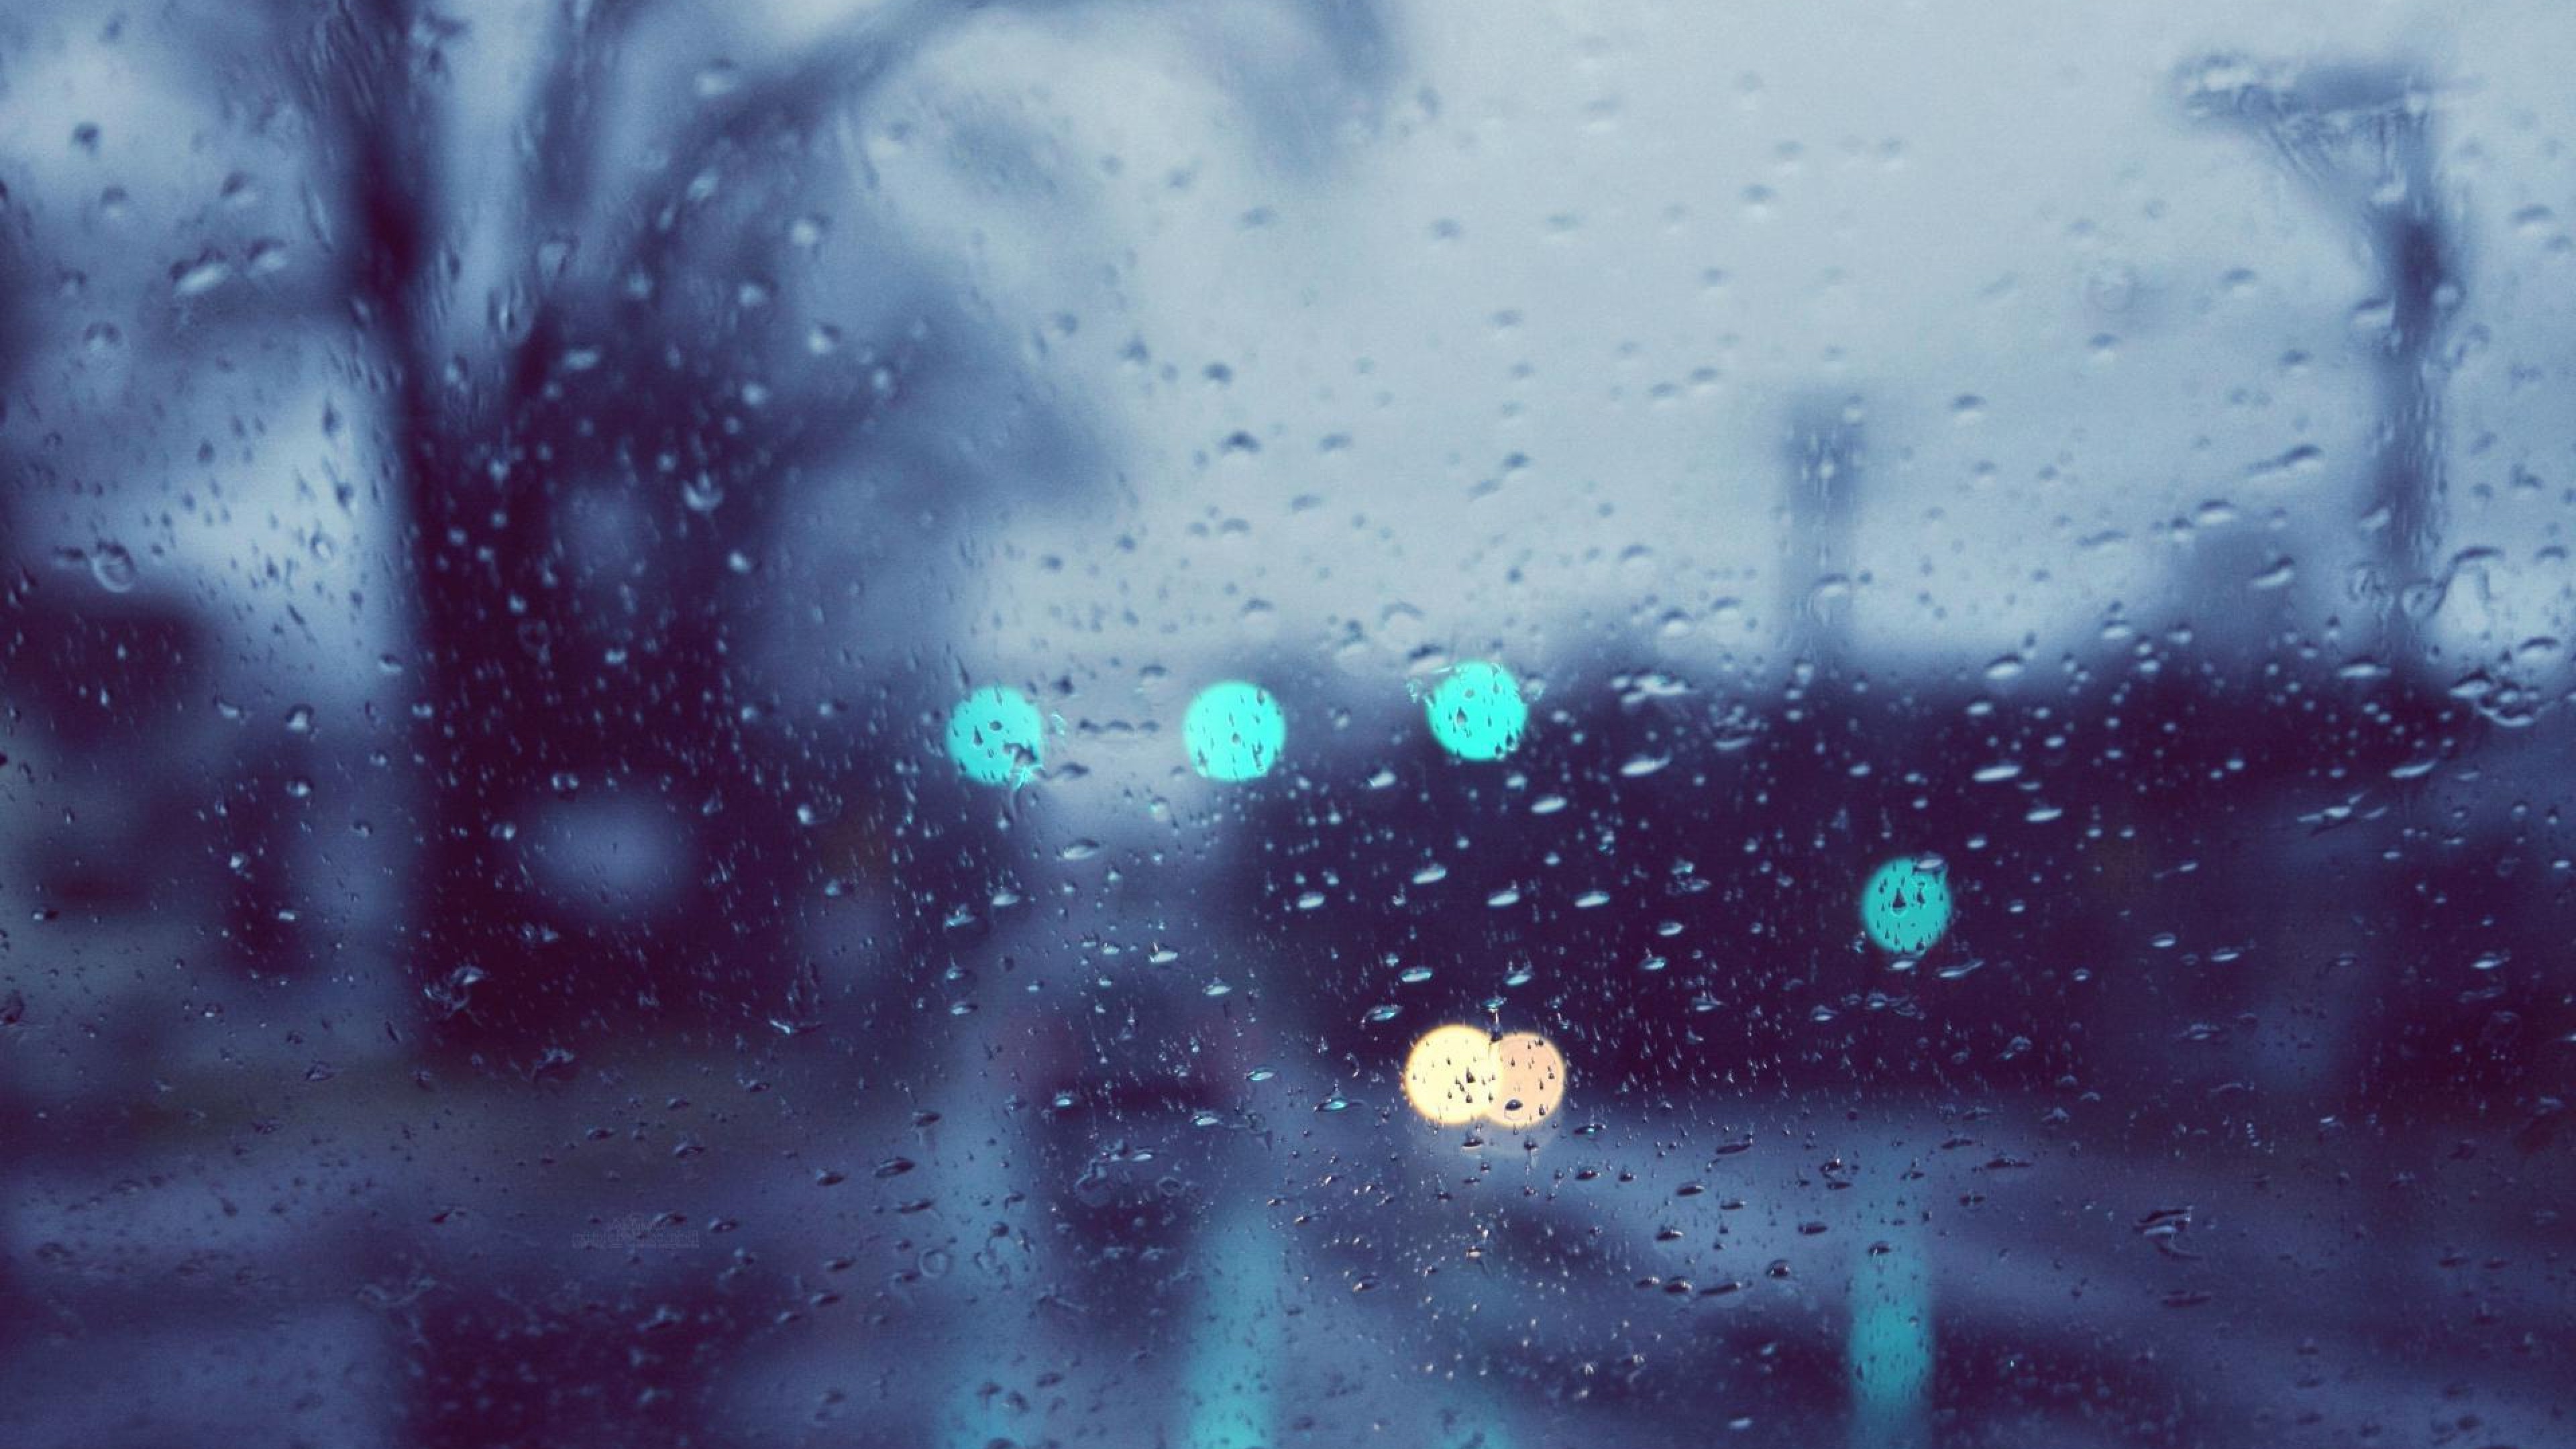 Rain Glare Glass Drops, HD Nature, 4k Wallpaper, Image, Background, Photo and Picture